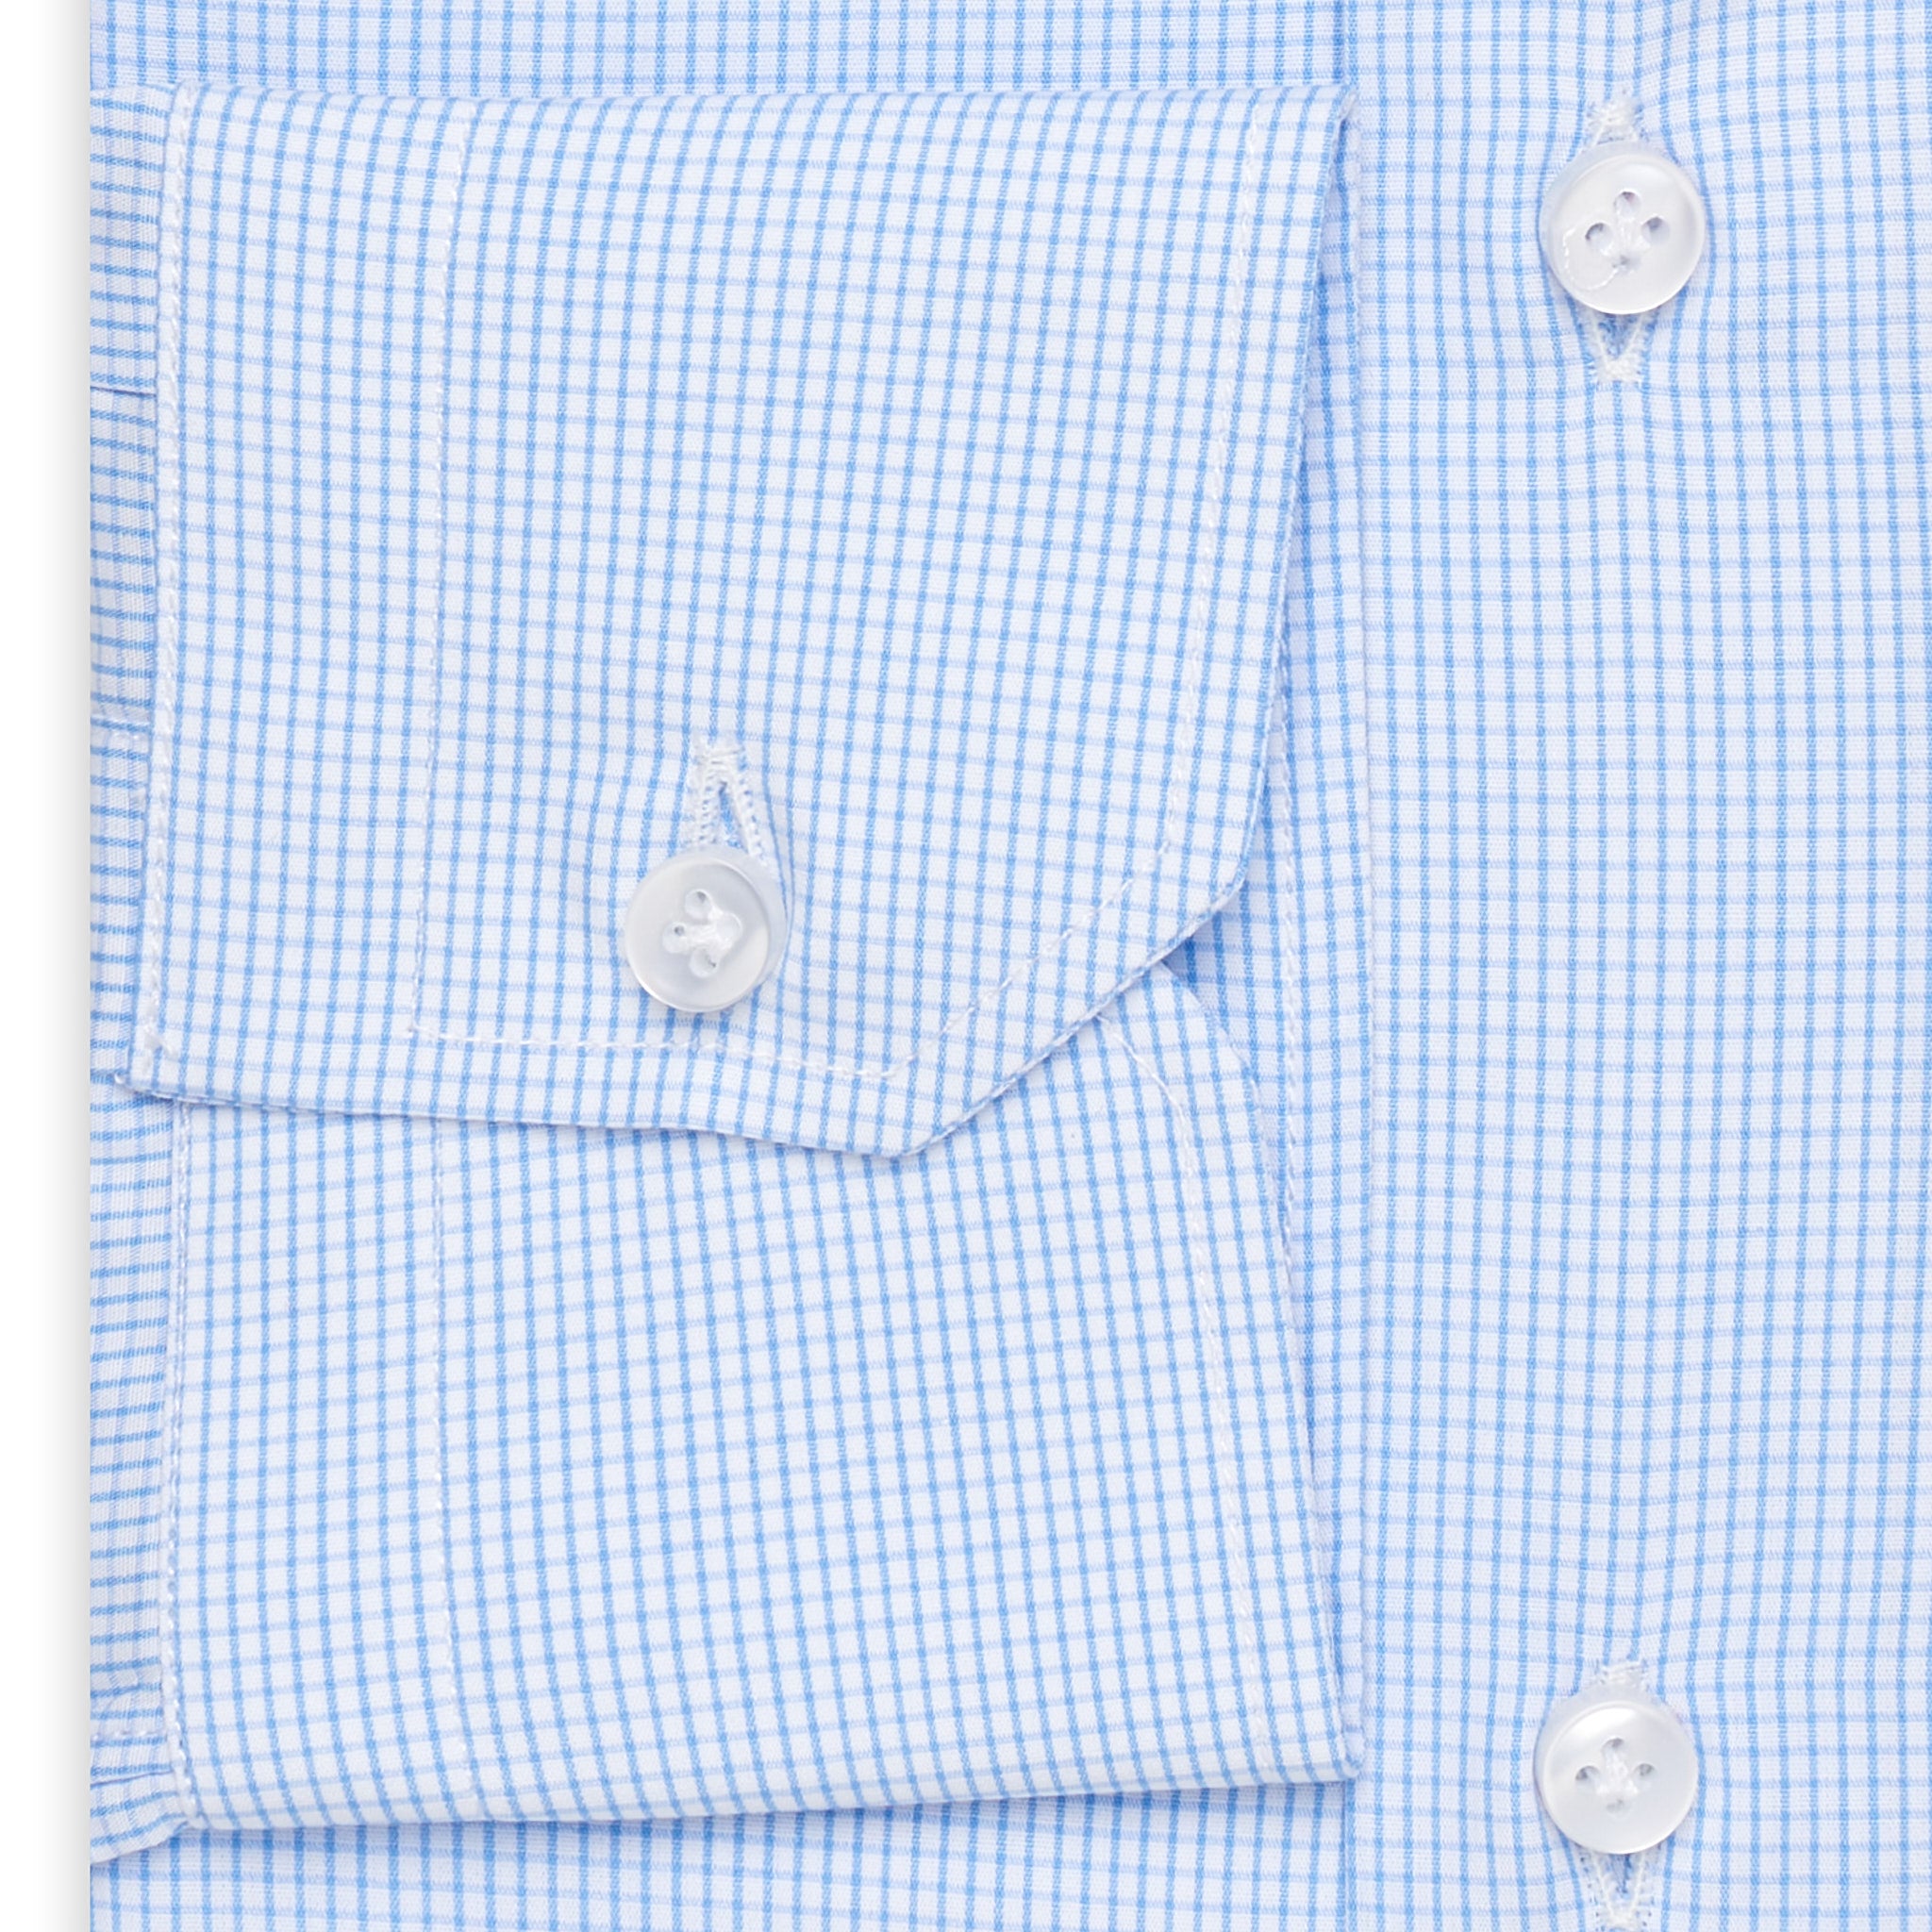 SARTORIO by KITON Light Blue Checkered Cotton Dress Shirt NEW Slim Fit